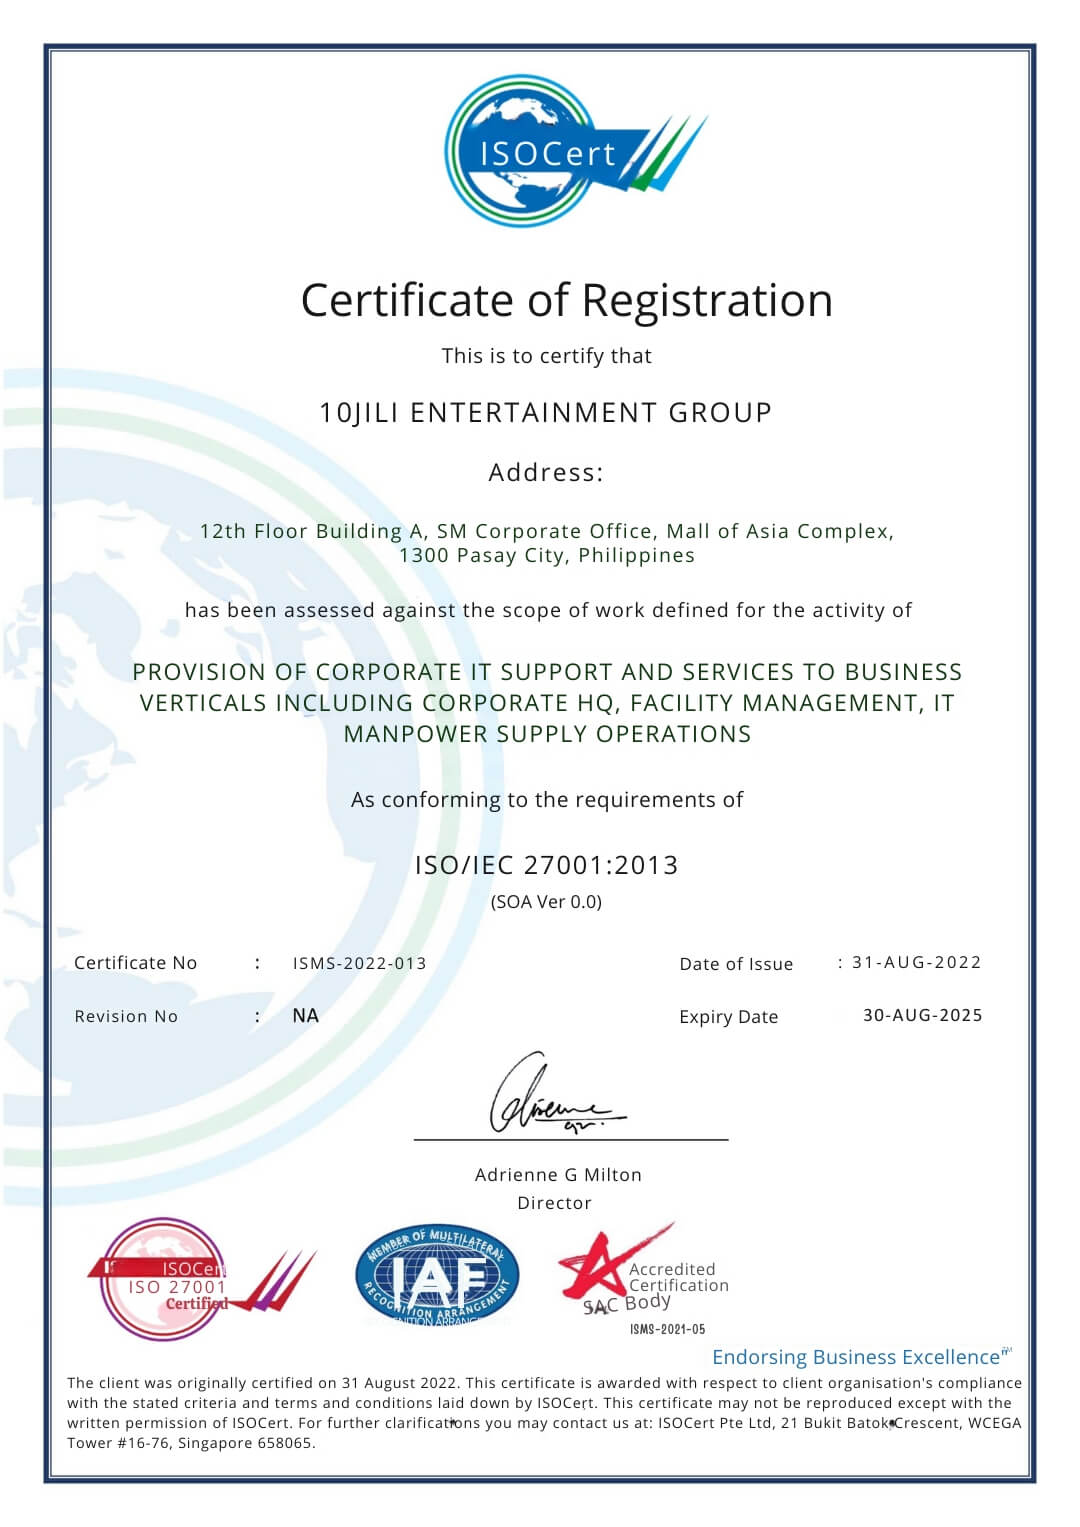 10jili has ISO/IEC 27001:2013 certification